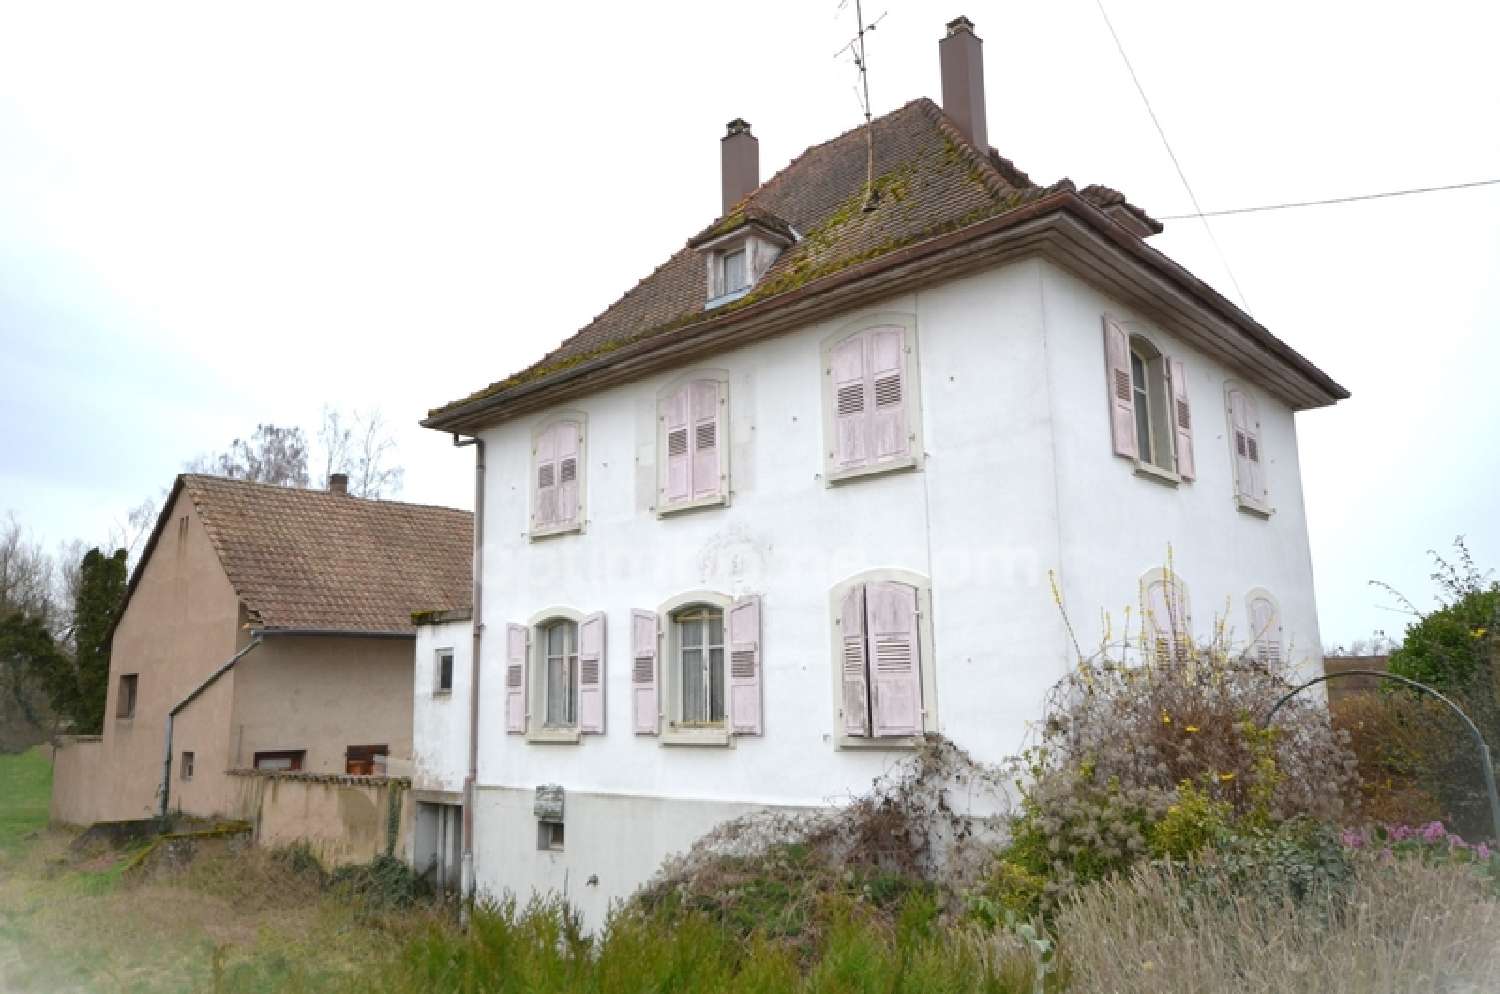  à vendre maison bourgeoise Erstein Bas-Rhin 5